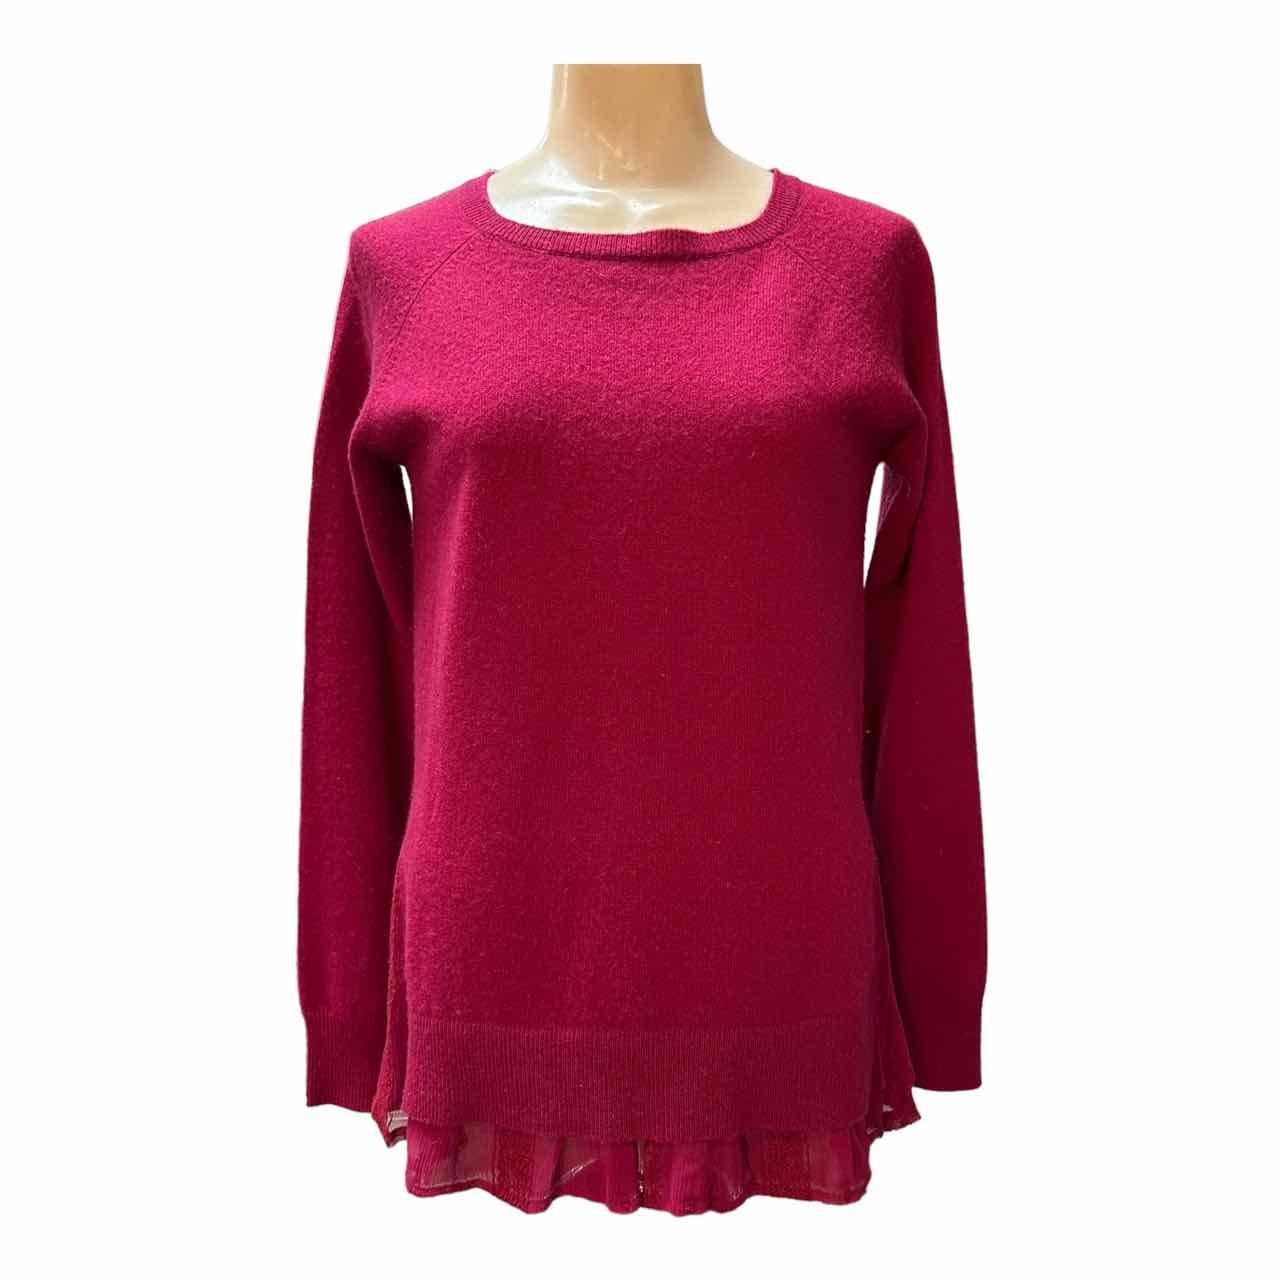 Garnet Hill Size XS Sweater